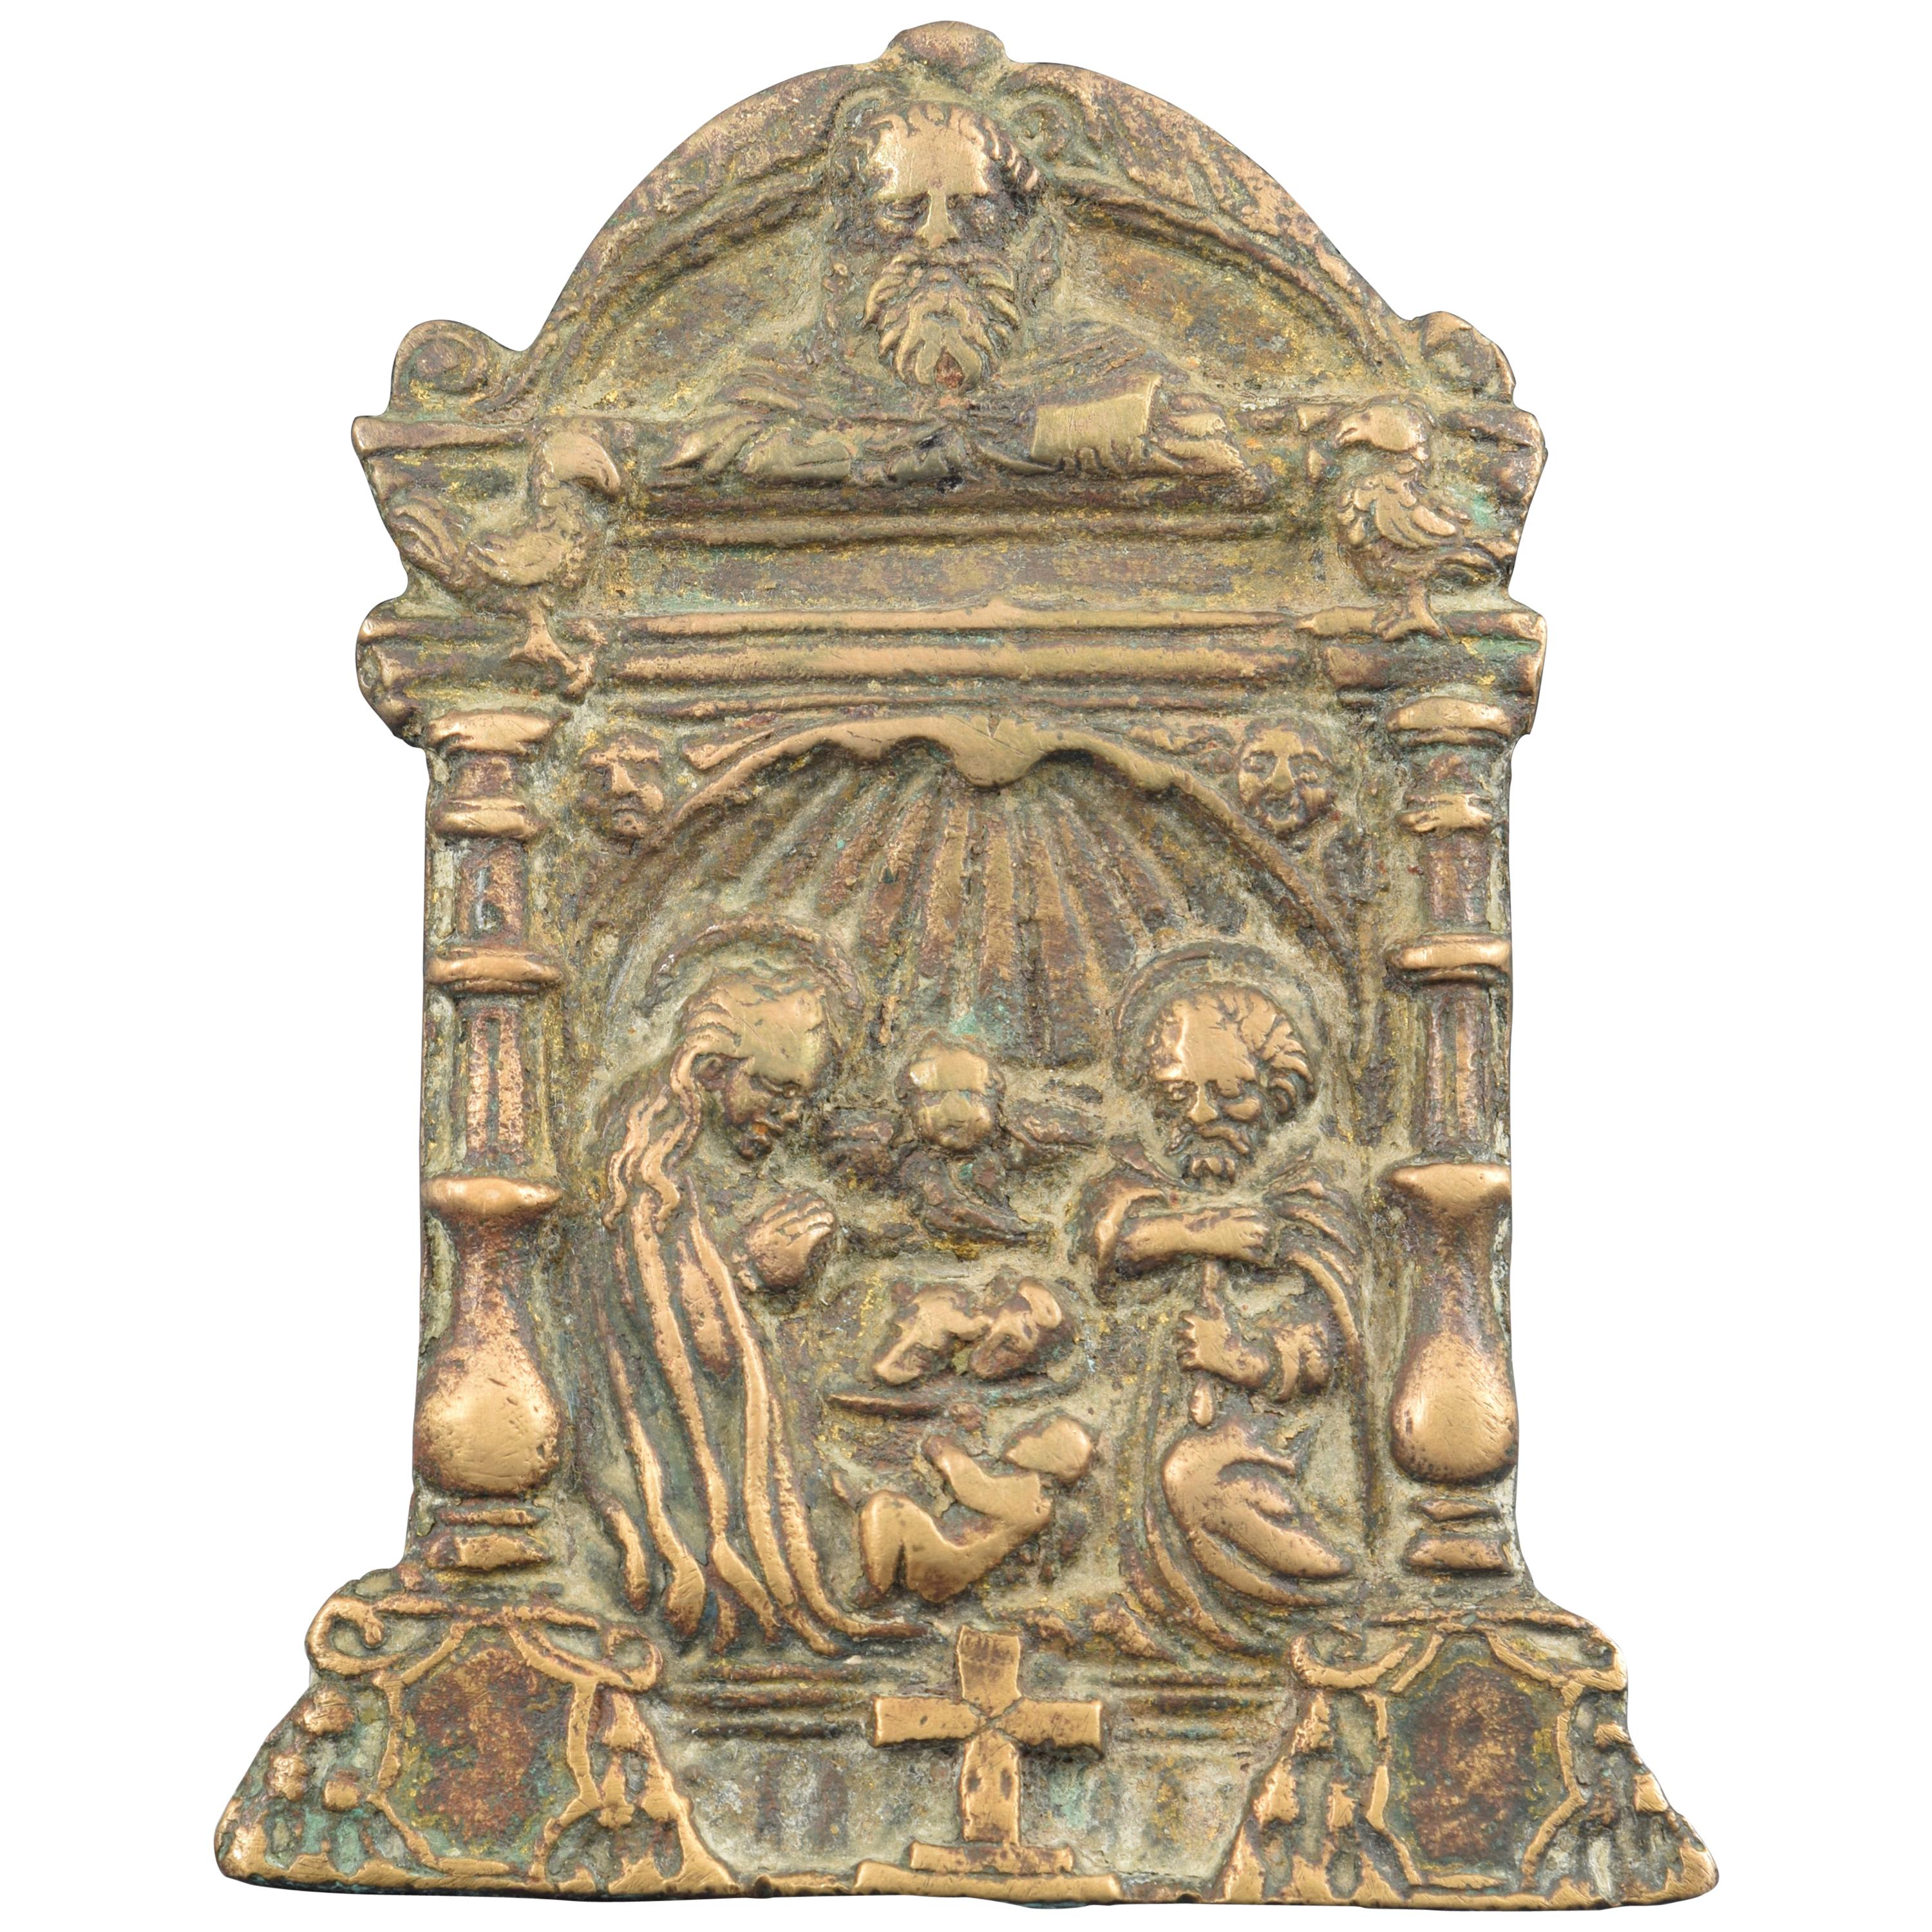 Bronze Pax or Pax Board, 16th Century